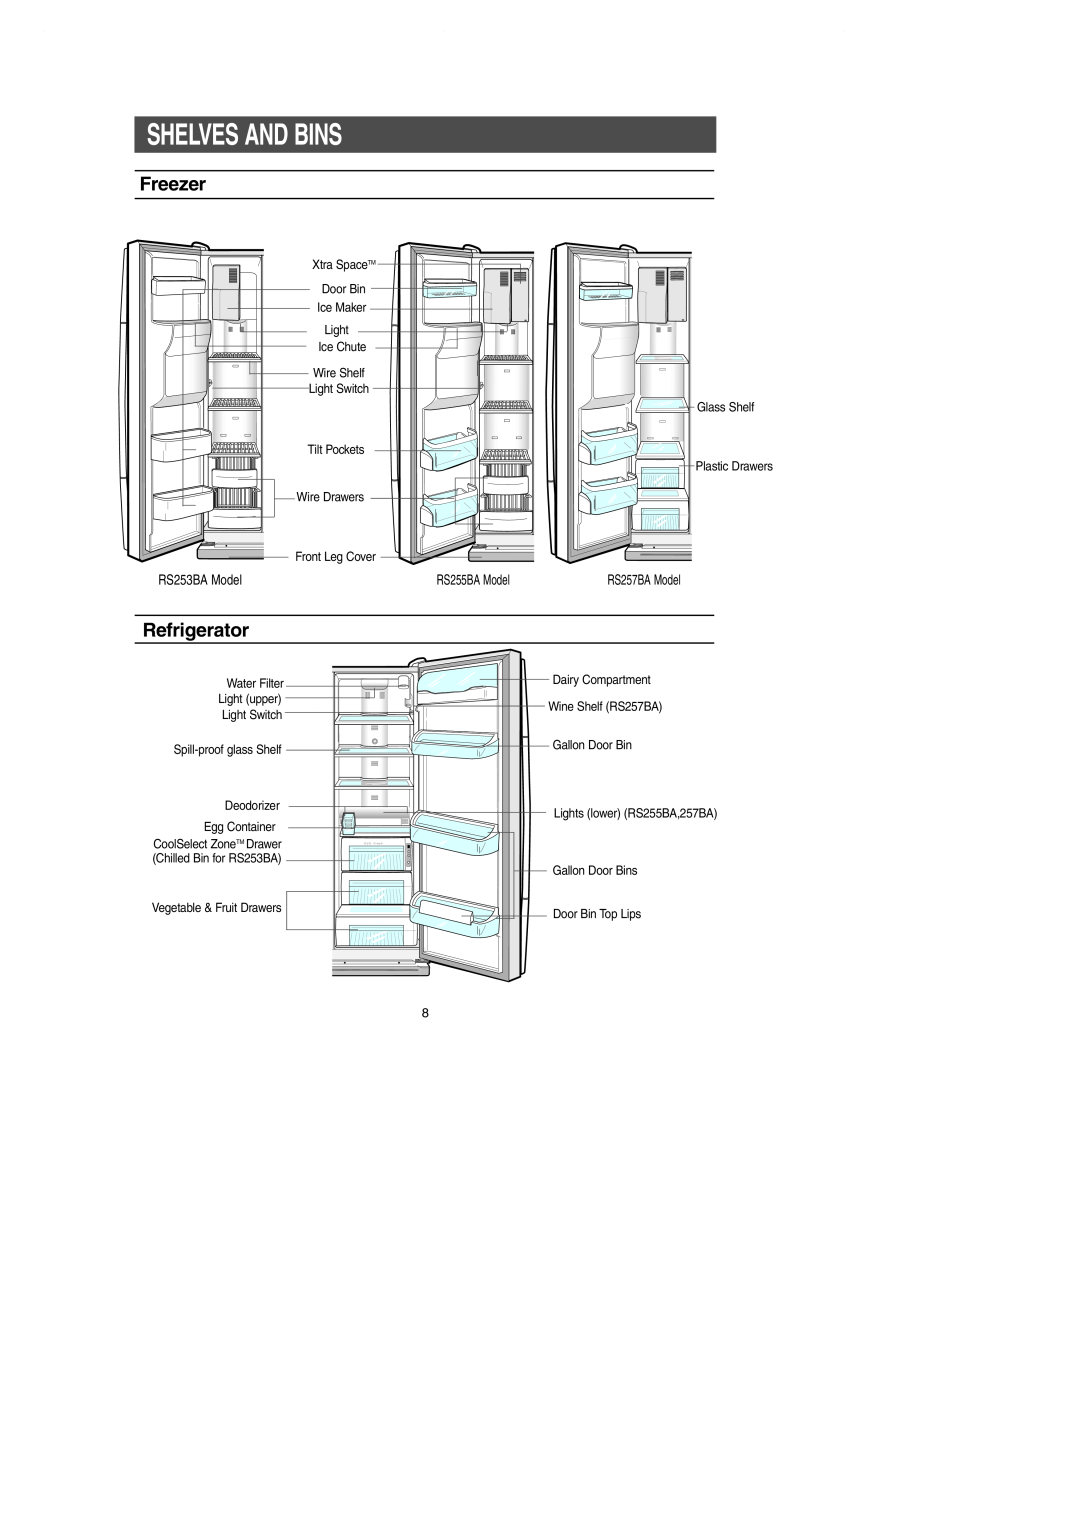 Samsung RS257BAWW owner manual Shelves And Bins, Freezer, Refrigerator, RS253BA Model, RS255BA Model 